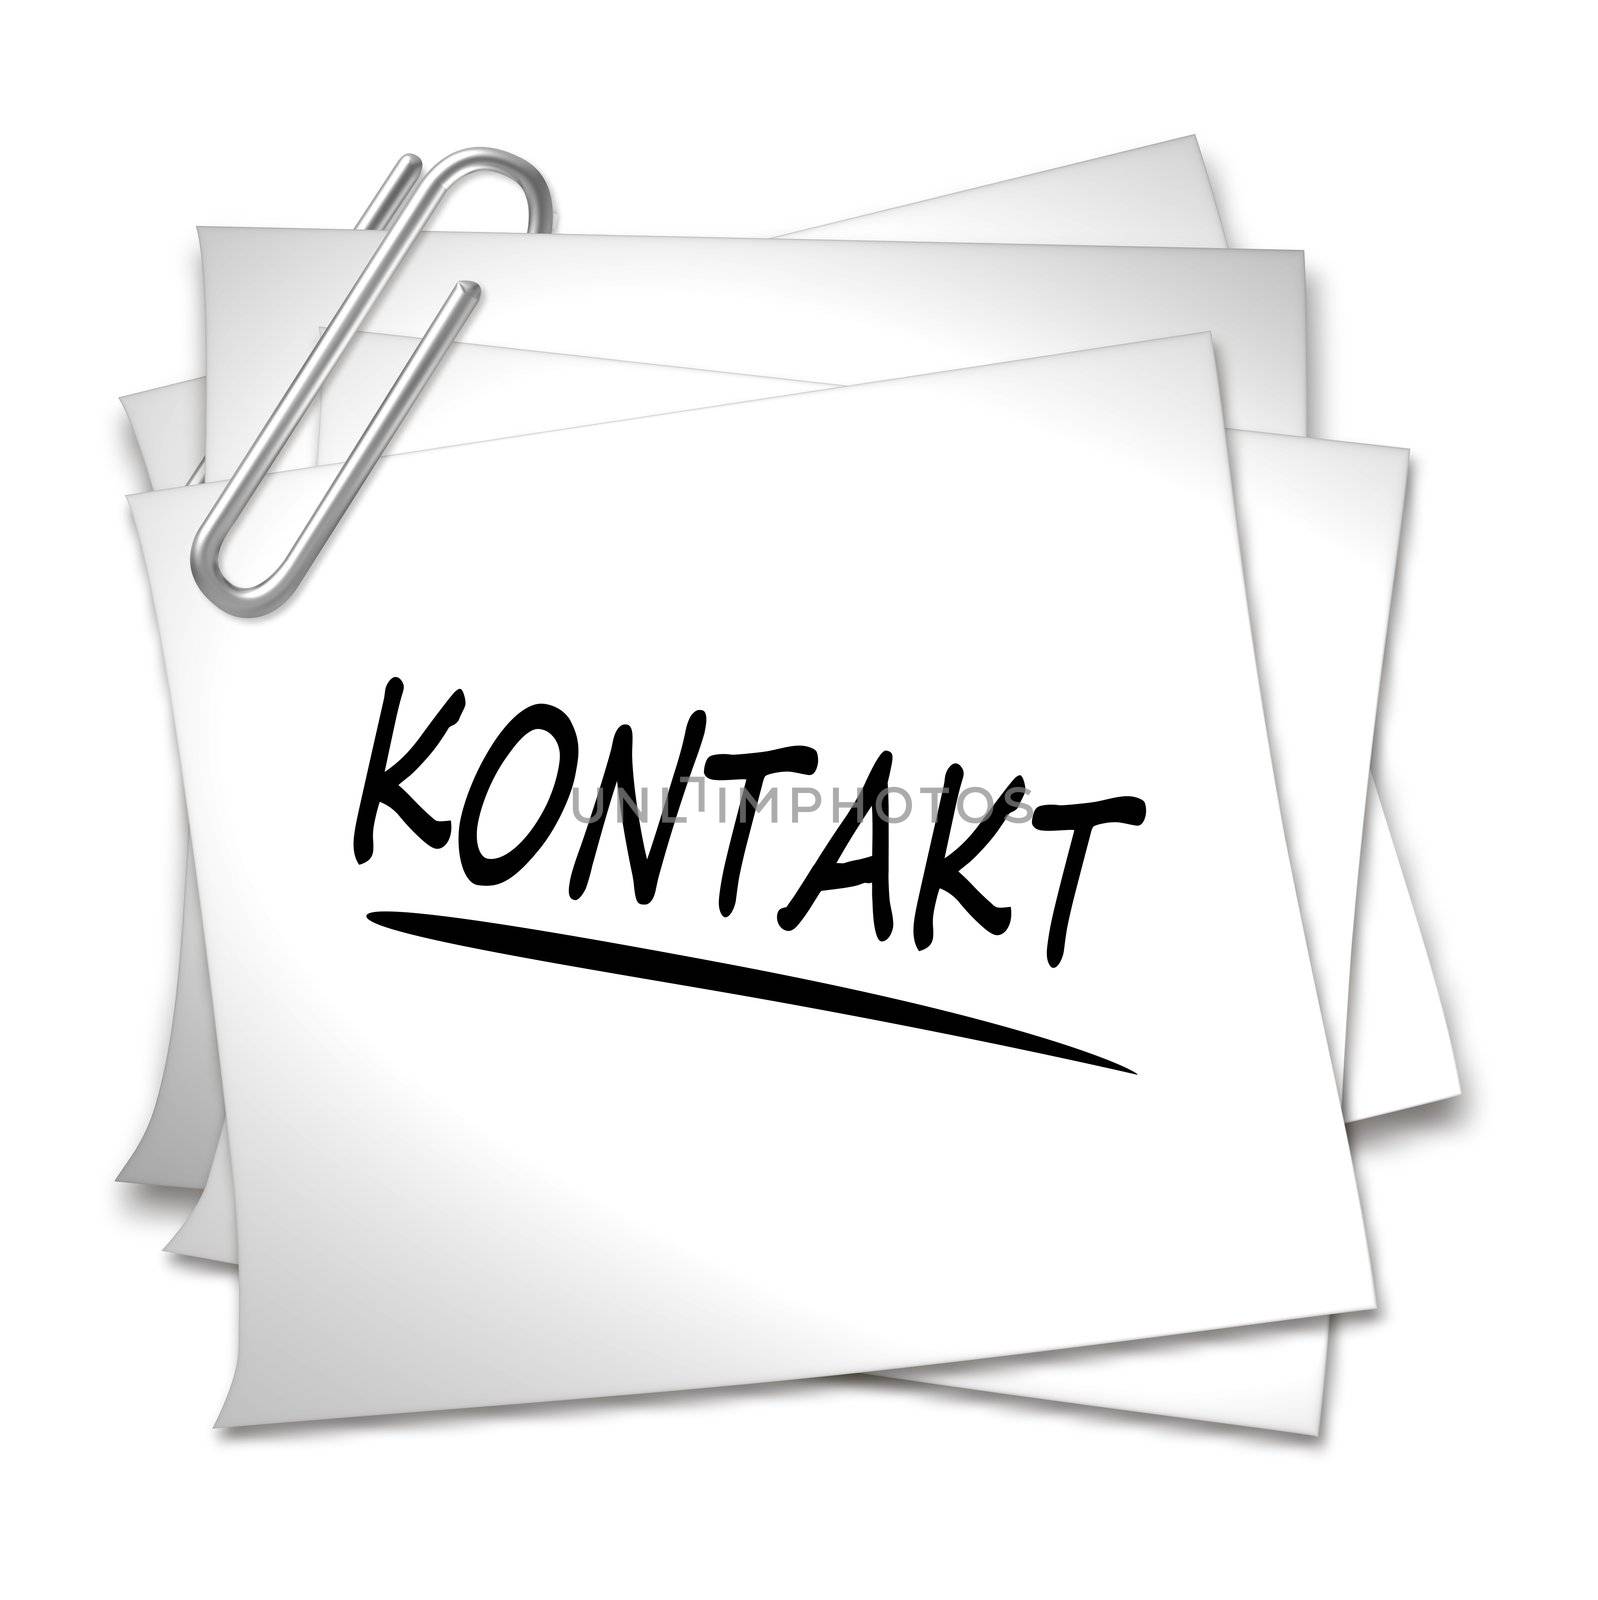 German Memo with Paper Clip - Kontakt by peromarketing